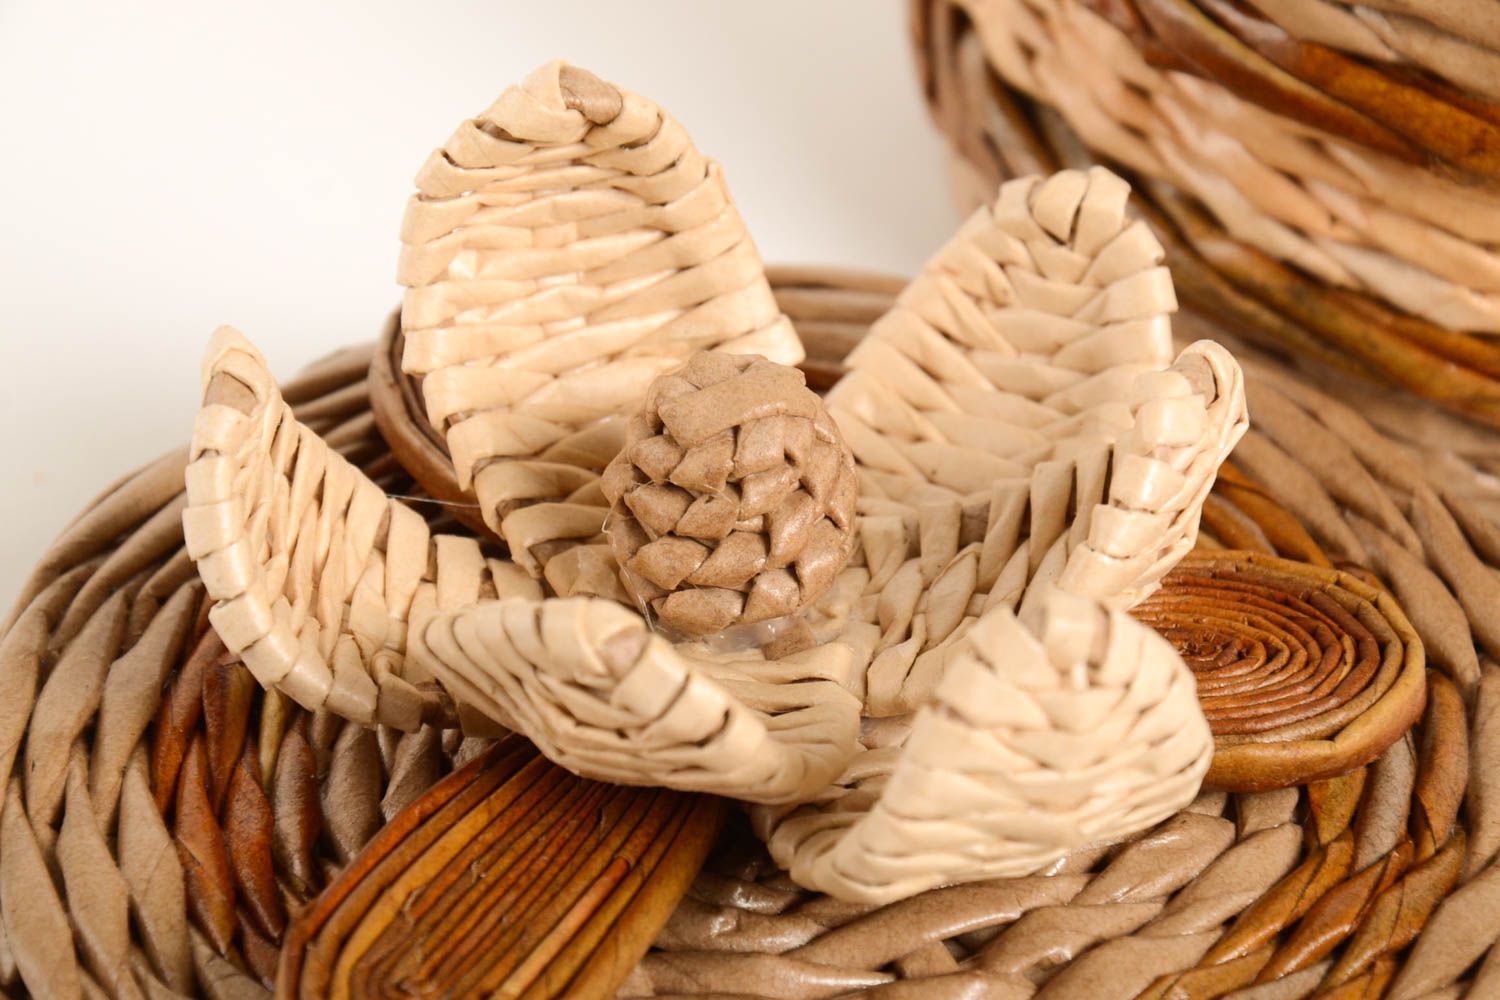 Handmade woven basket unusual lovely accessory interesting kitchen utensils photo 5